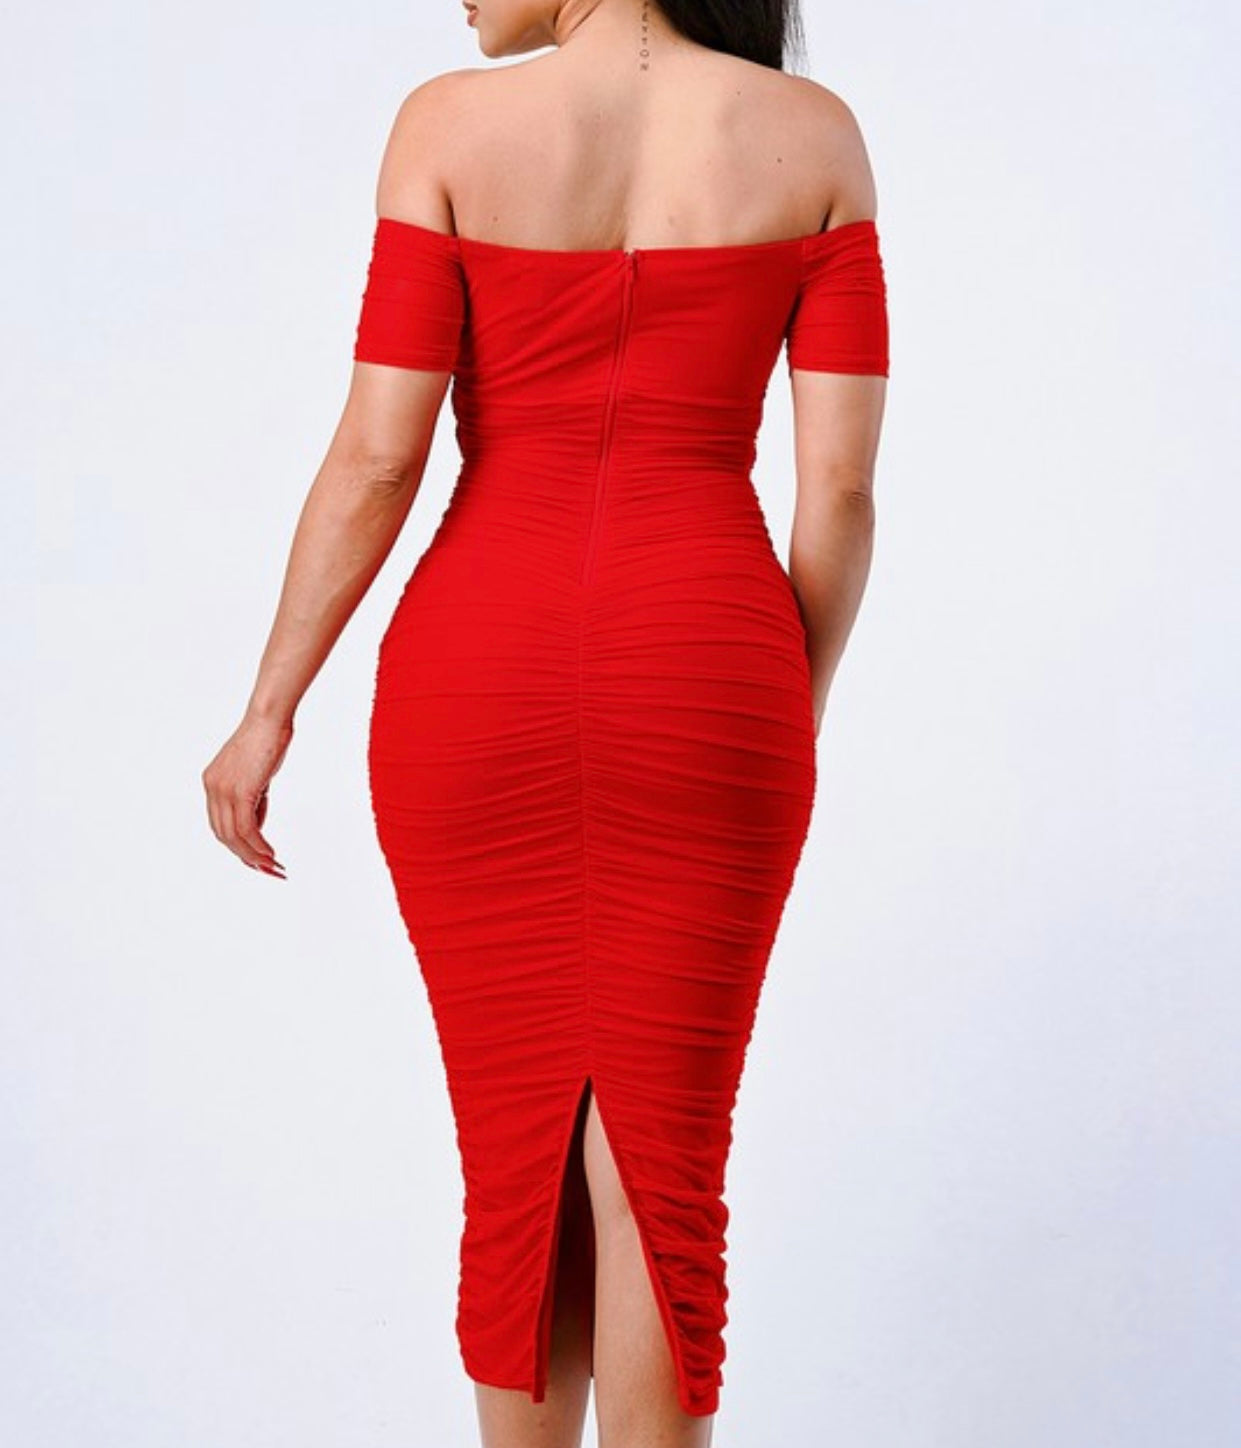 Adoring you red dress